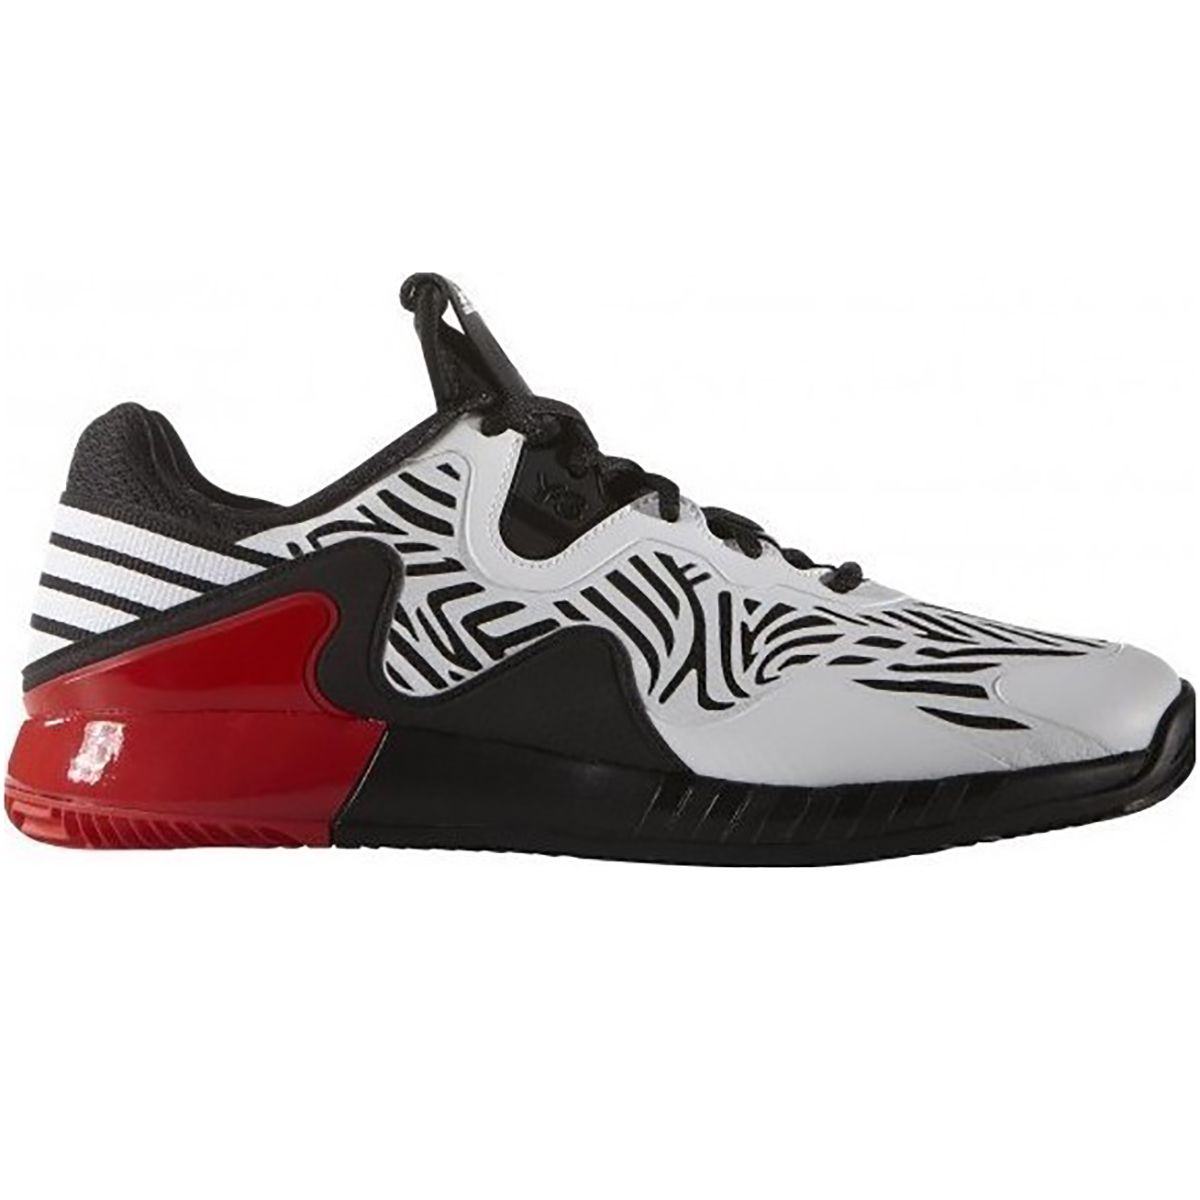 Adidas Adizero 2016 Tennis Shoes S78389